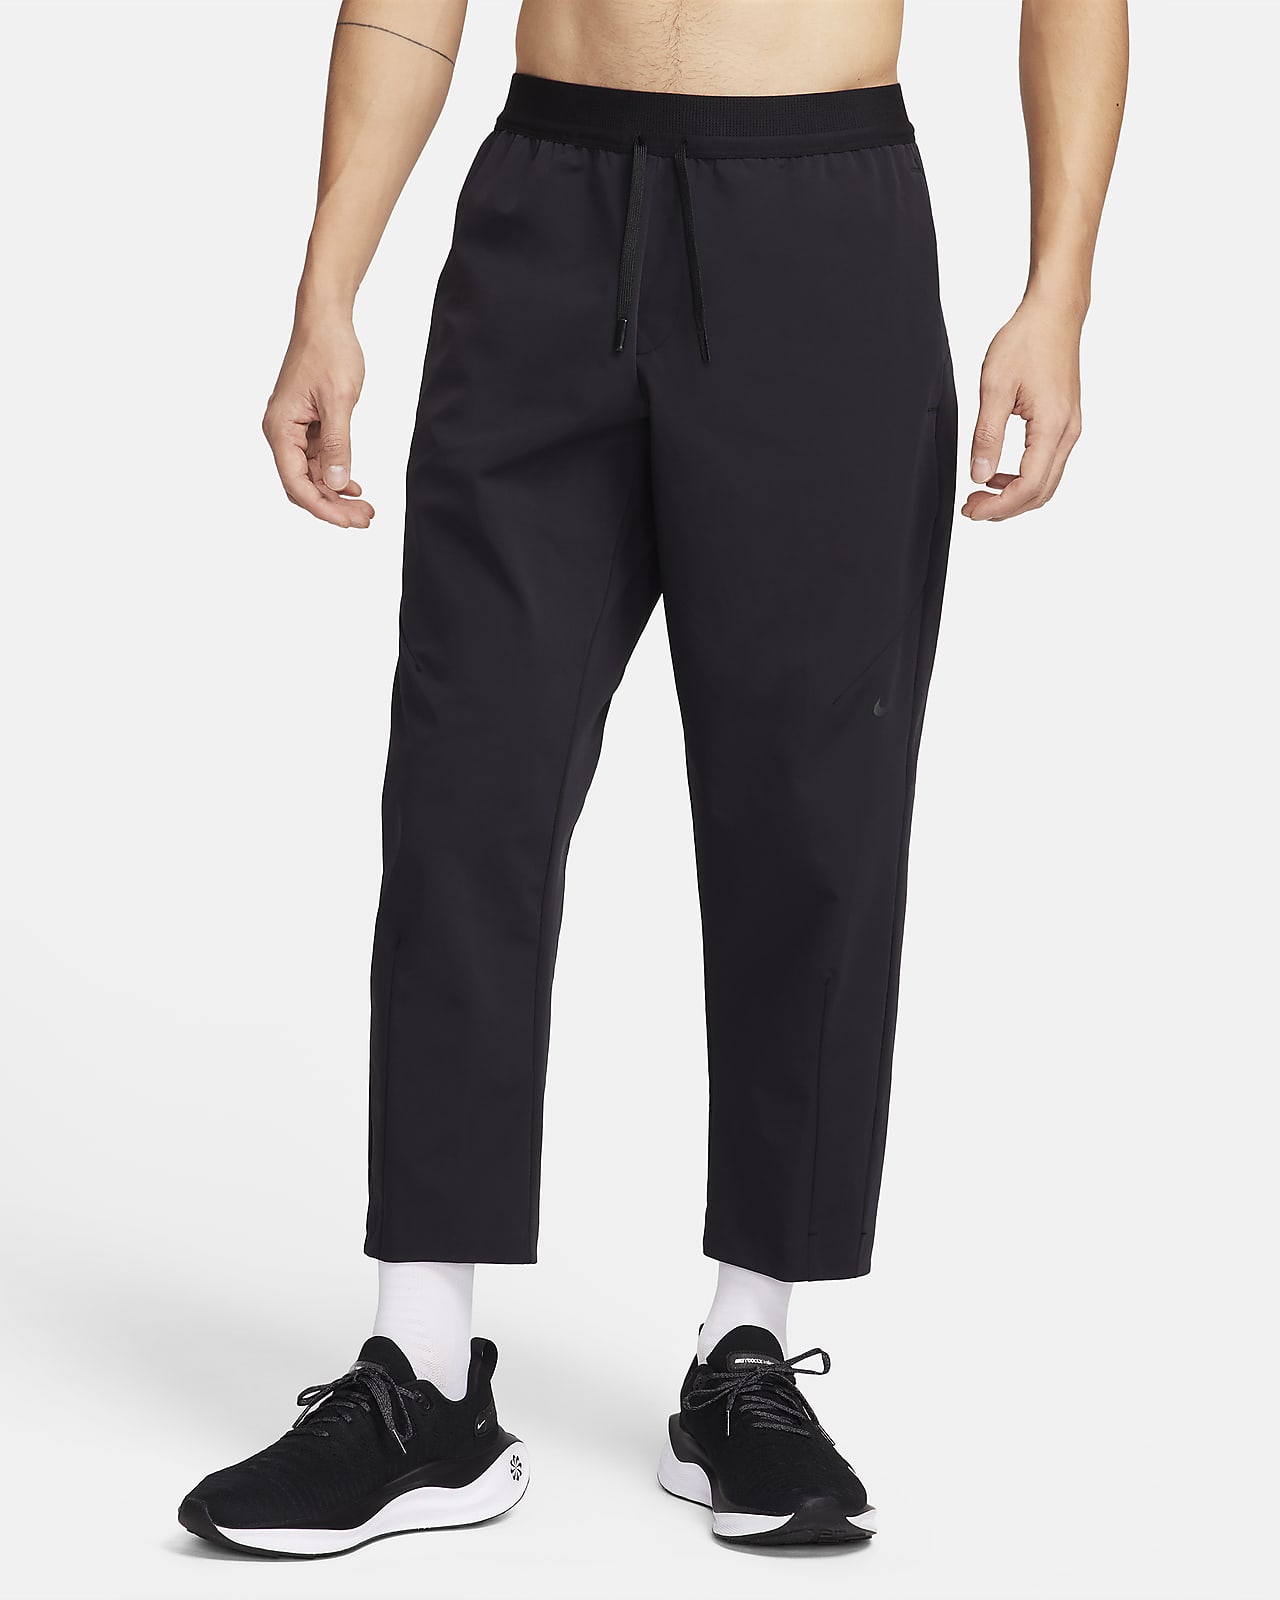 Nike A.P.S. Pantaloni versatili in tessuto Dri-FIT – Uomo